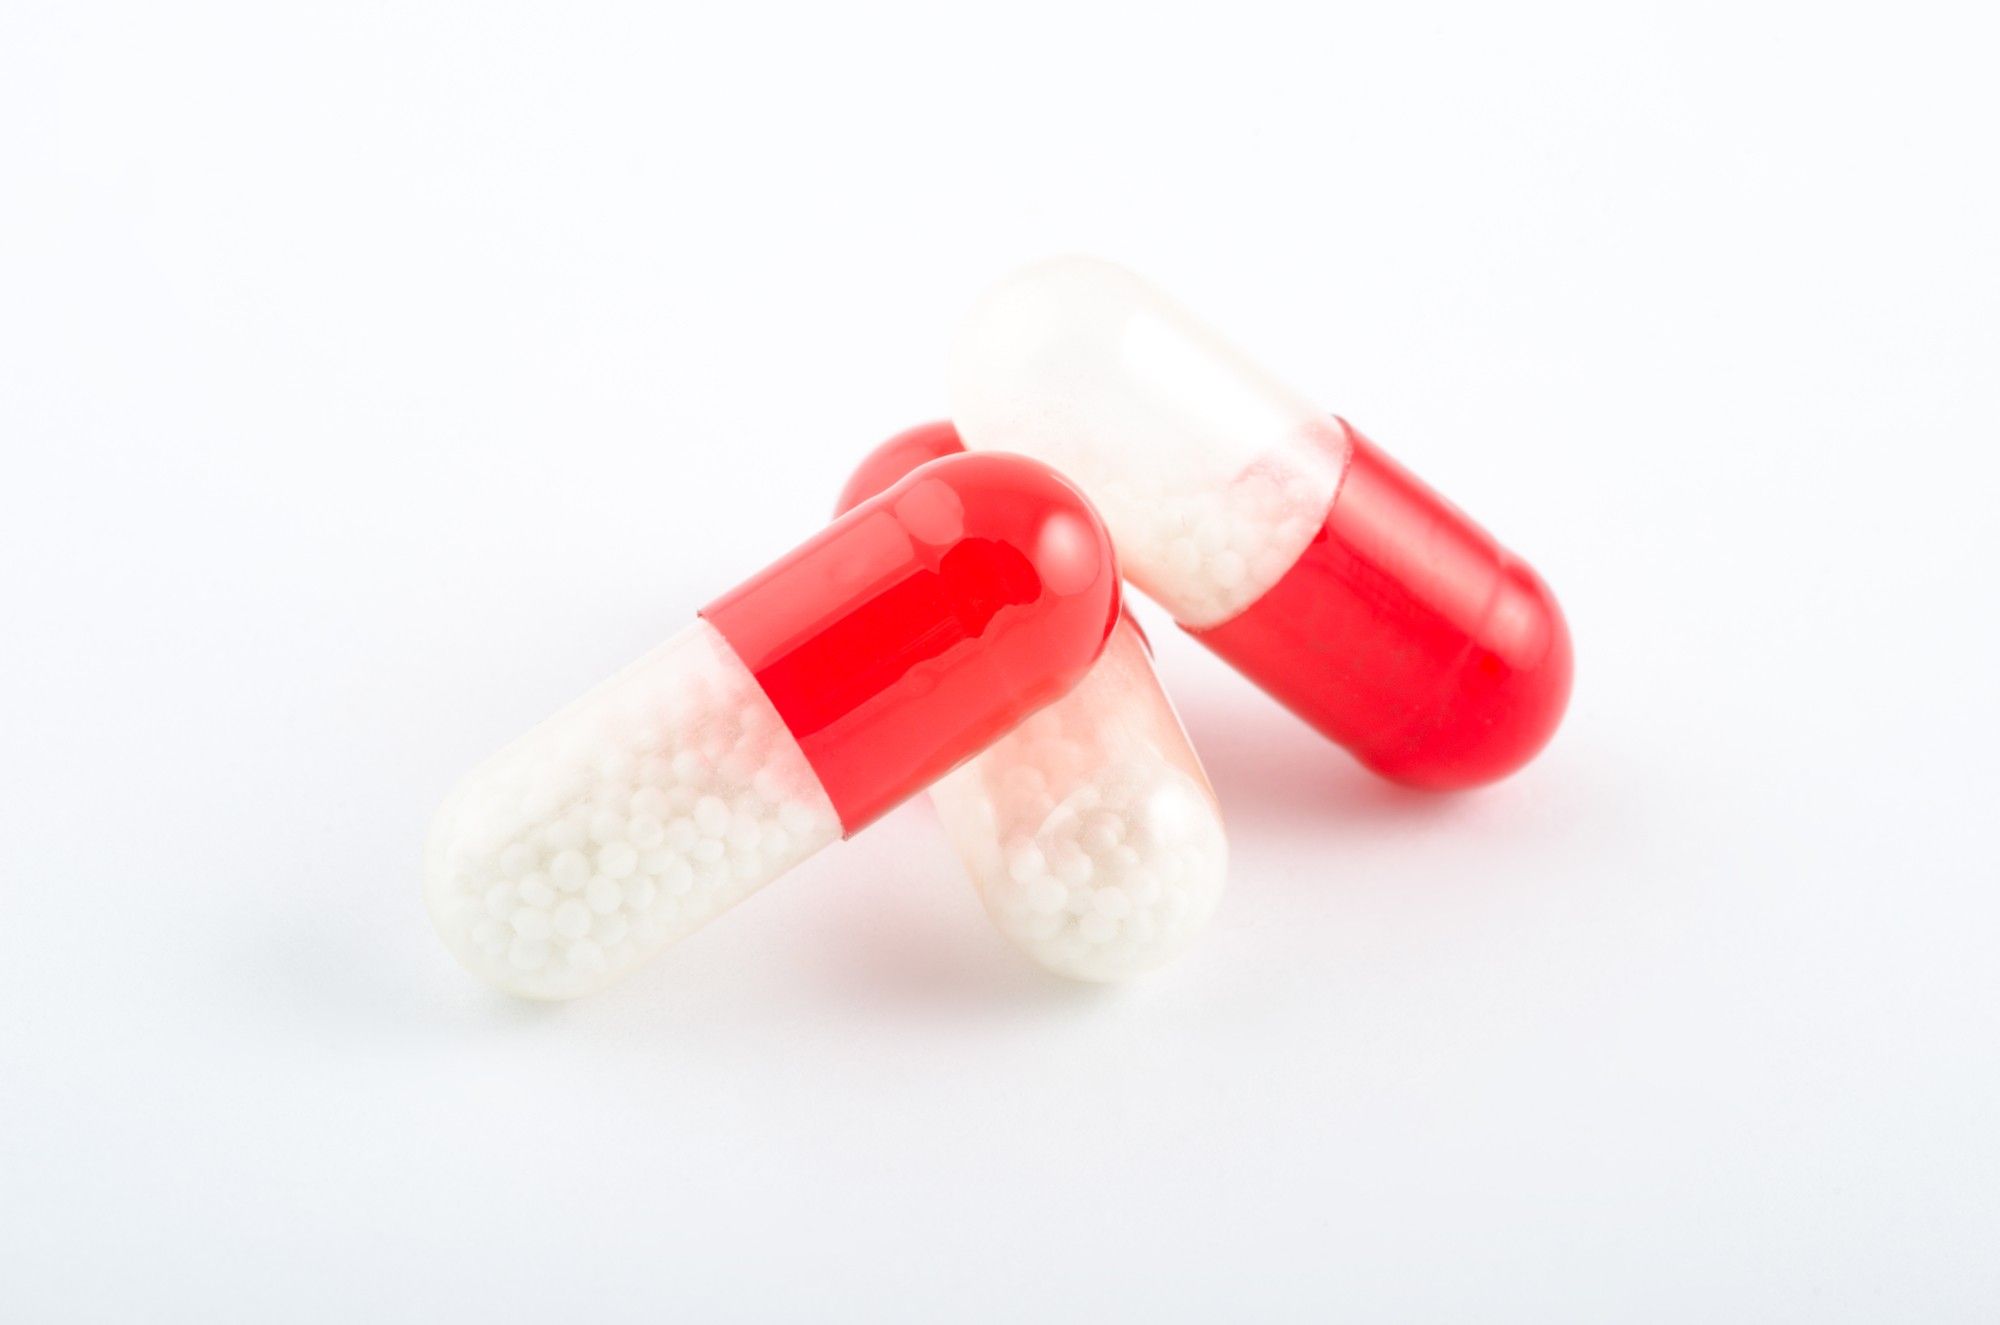 Tylenol Rapid Release gels allegedly release slower than normal Tylenol.